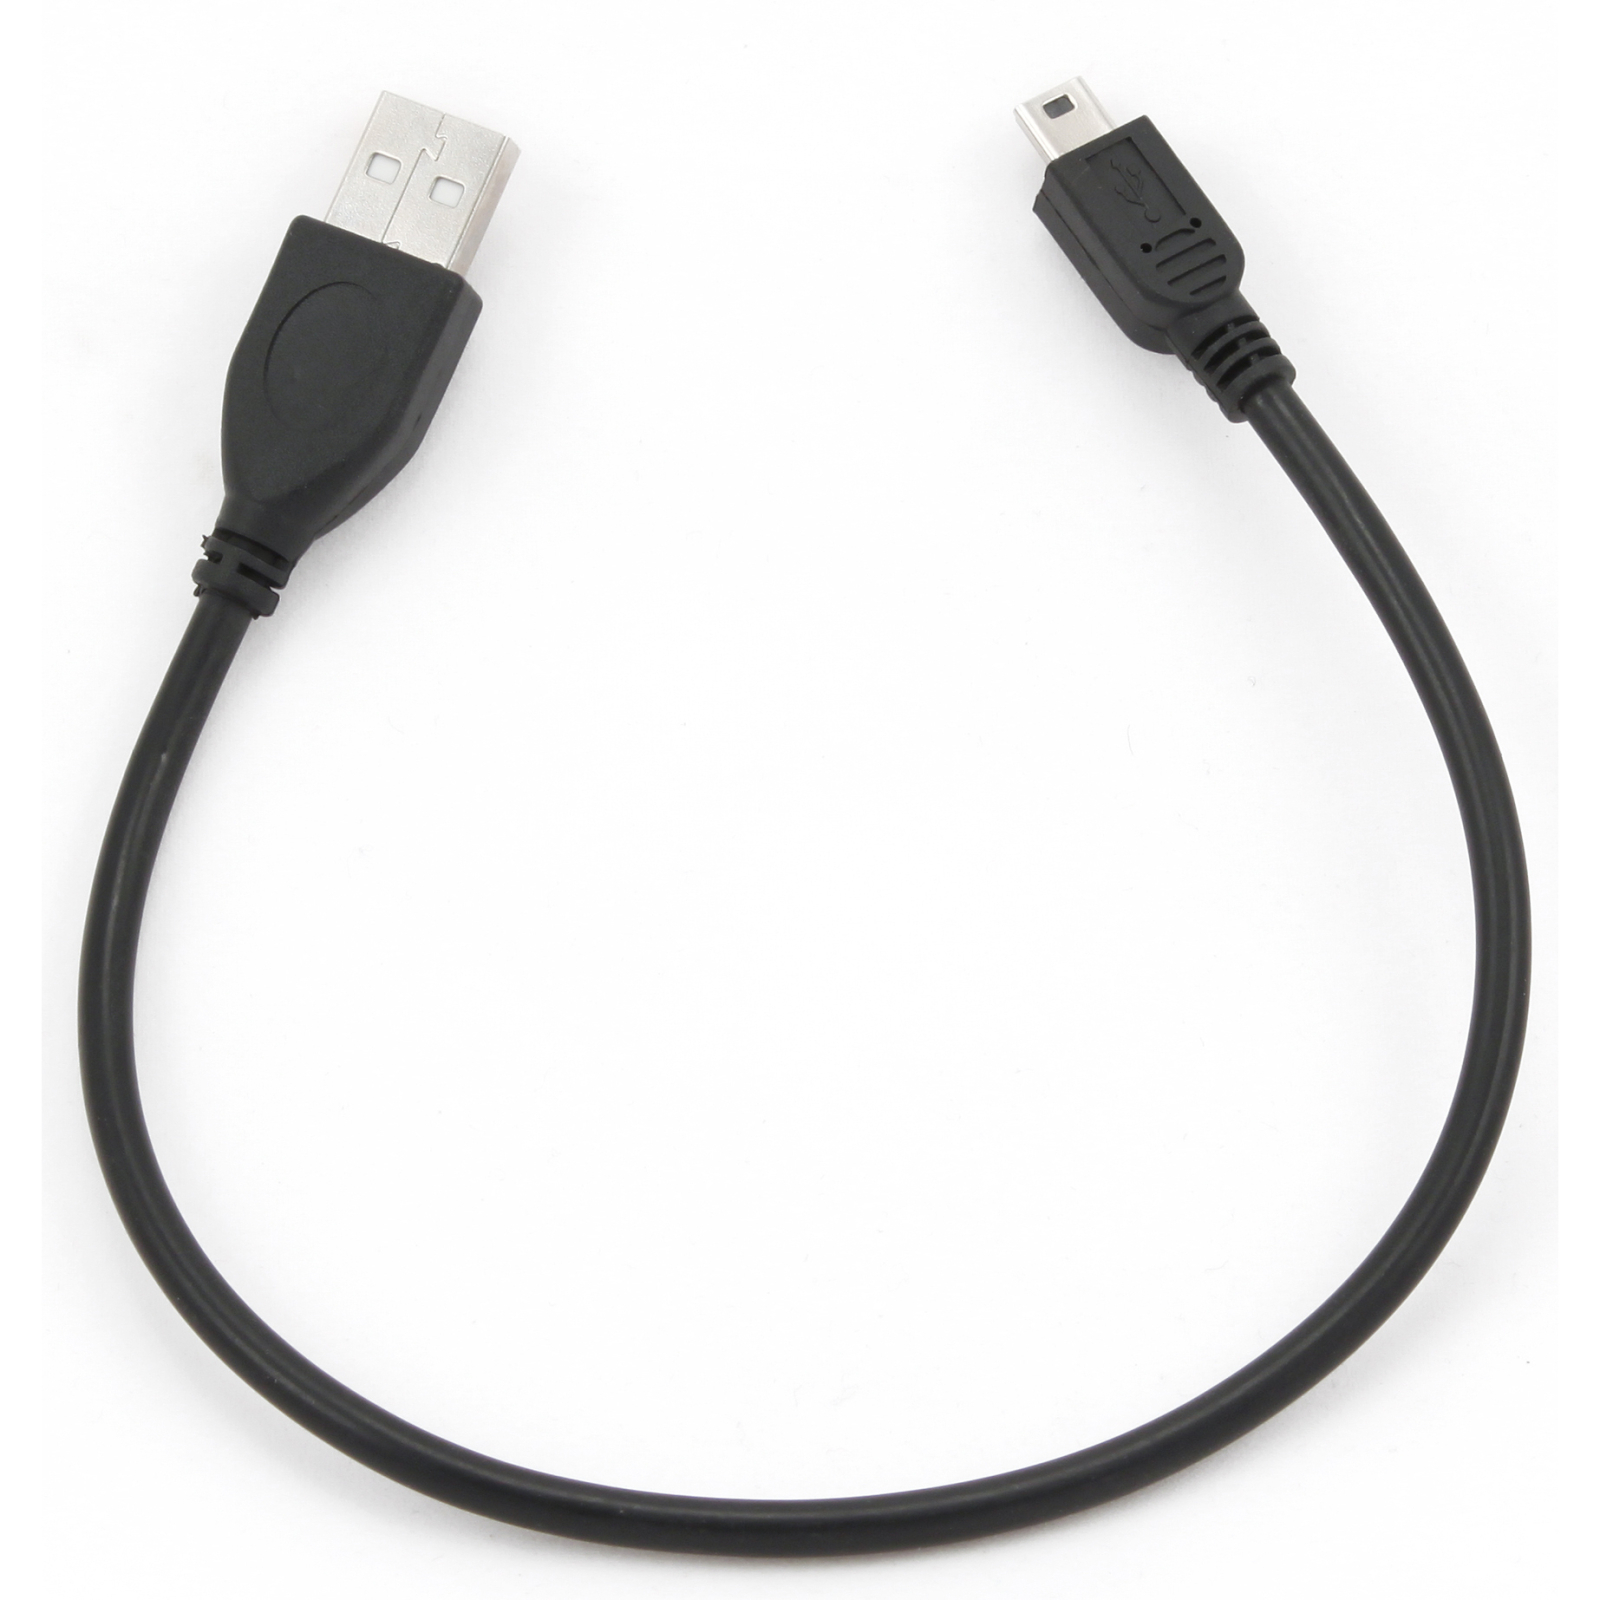 Дата кабель USB 2.0 AM to Mini 5P 1.8m Cablexpert (CCP-USB2-AM5P-6) зображення 2